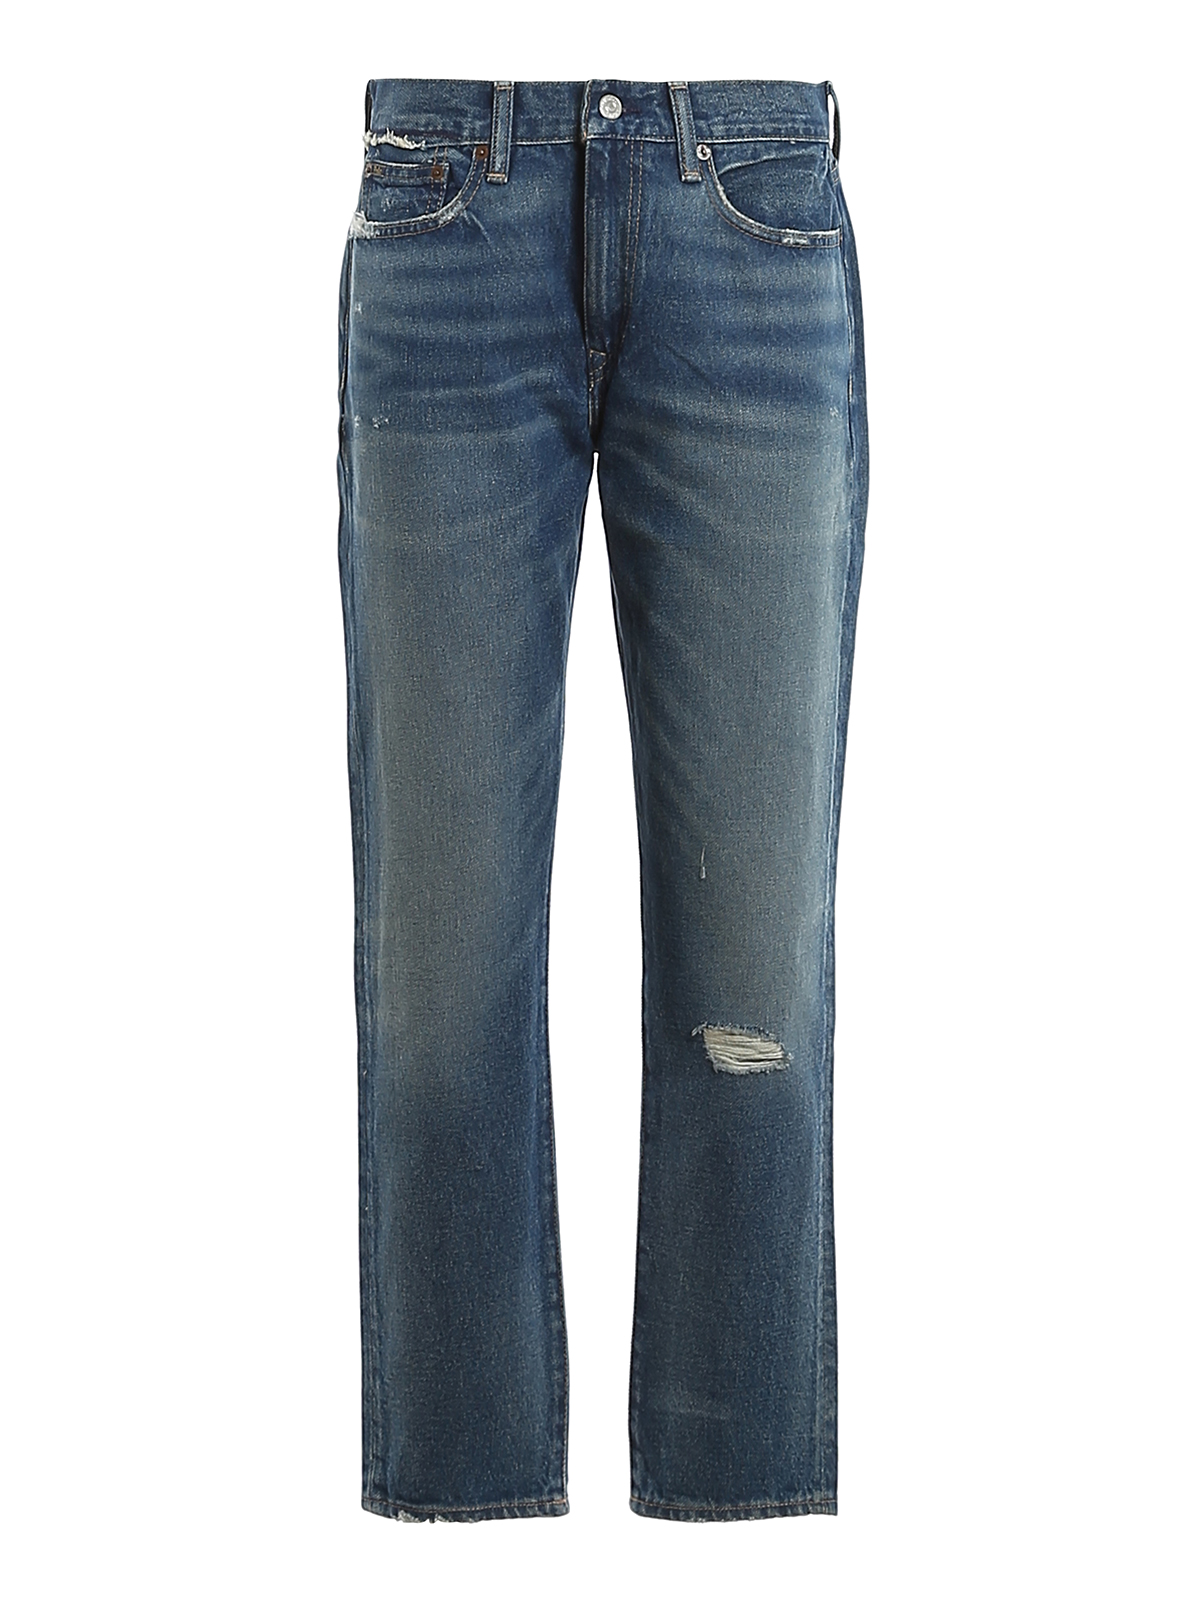 Boyfriend Polo Ralph Lauren - The Average jeans - 211777202001 | iKRIX.com